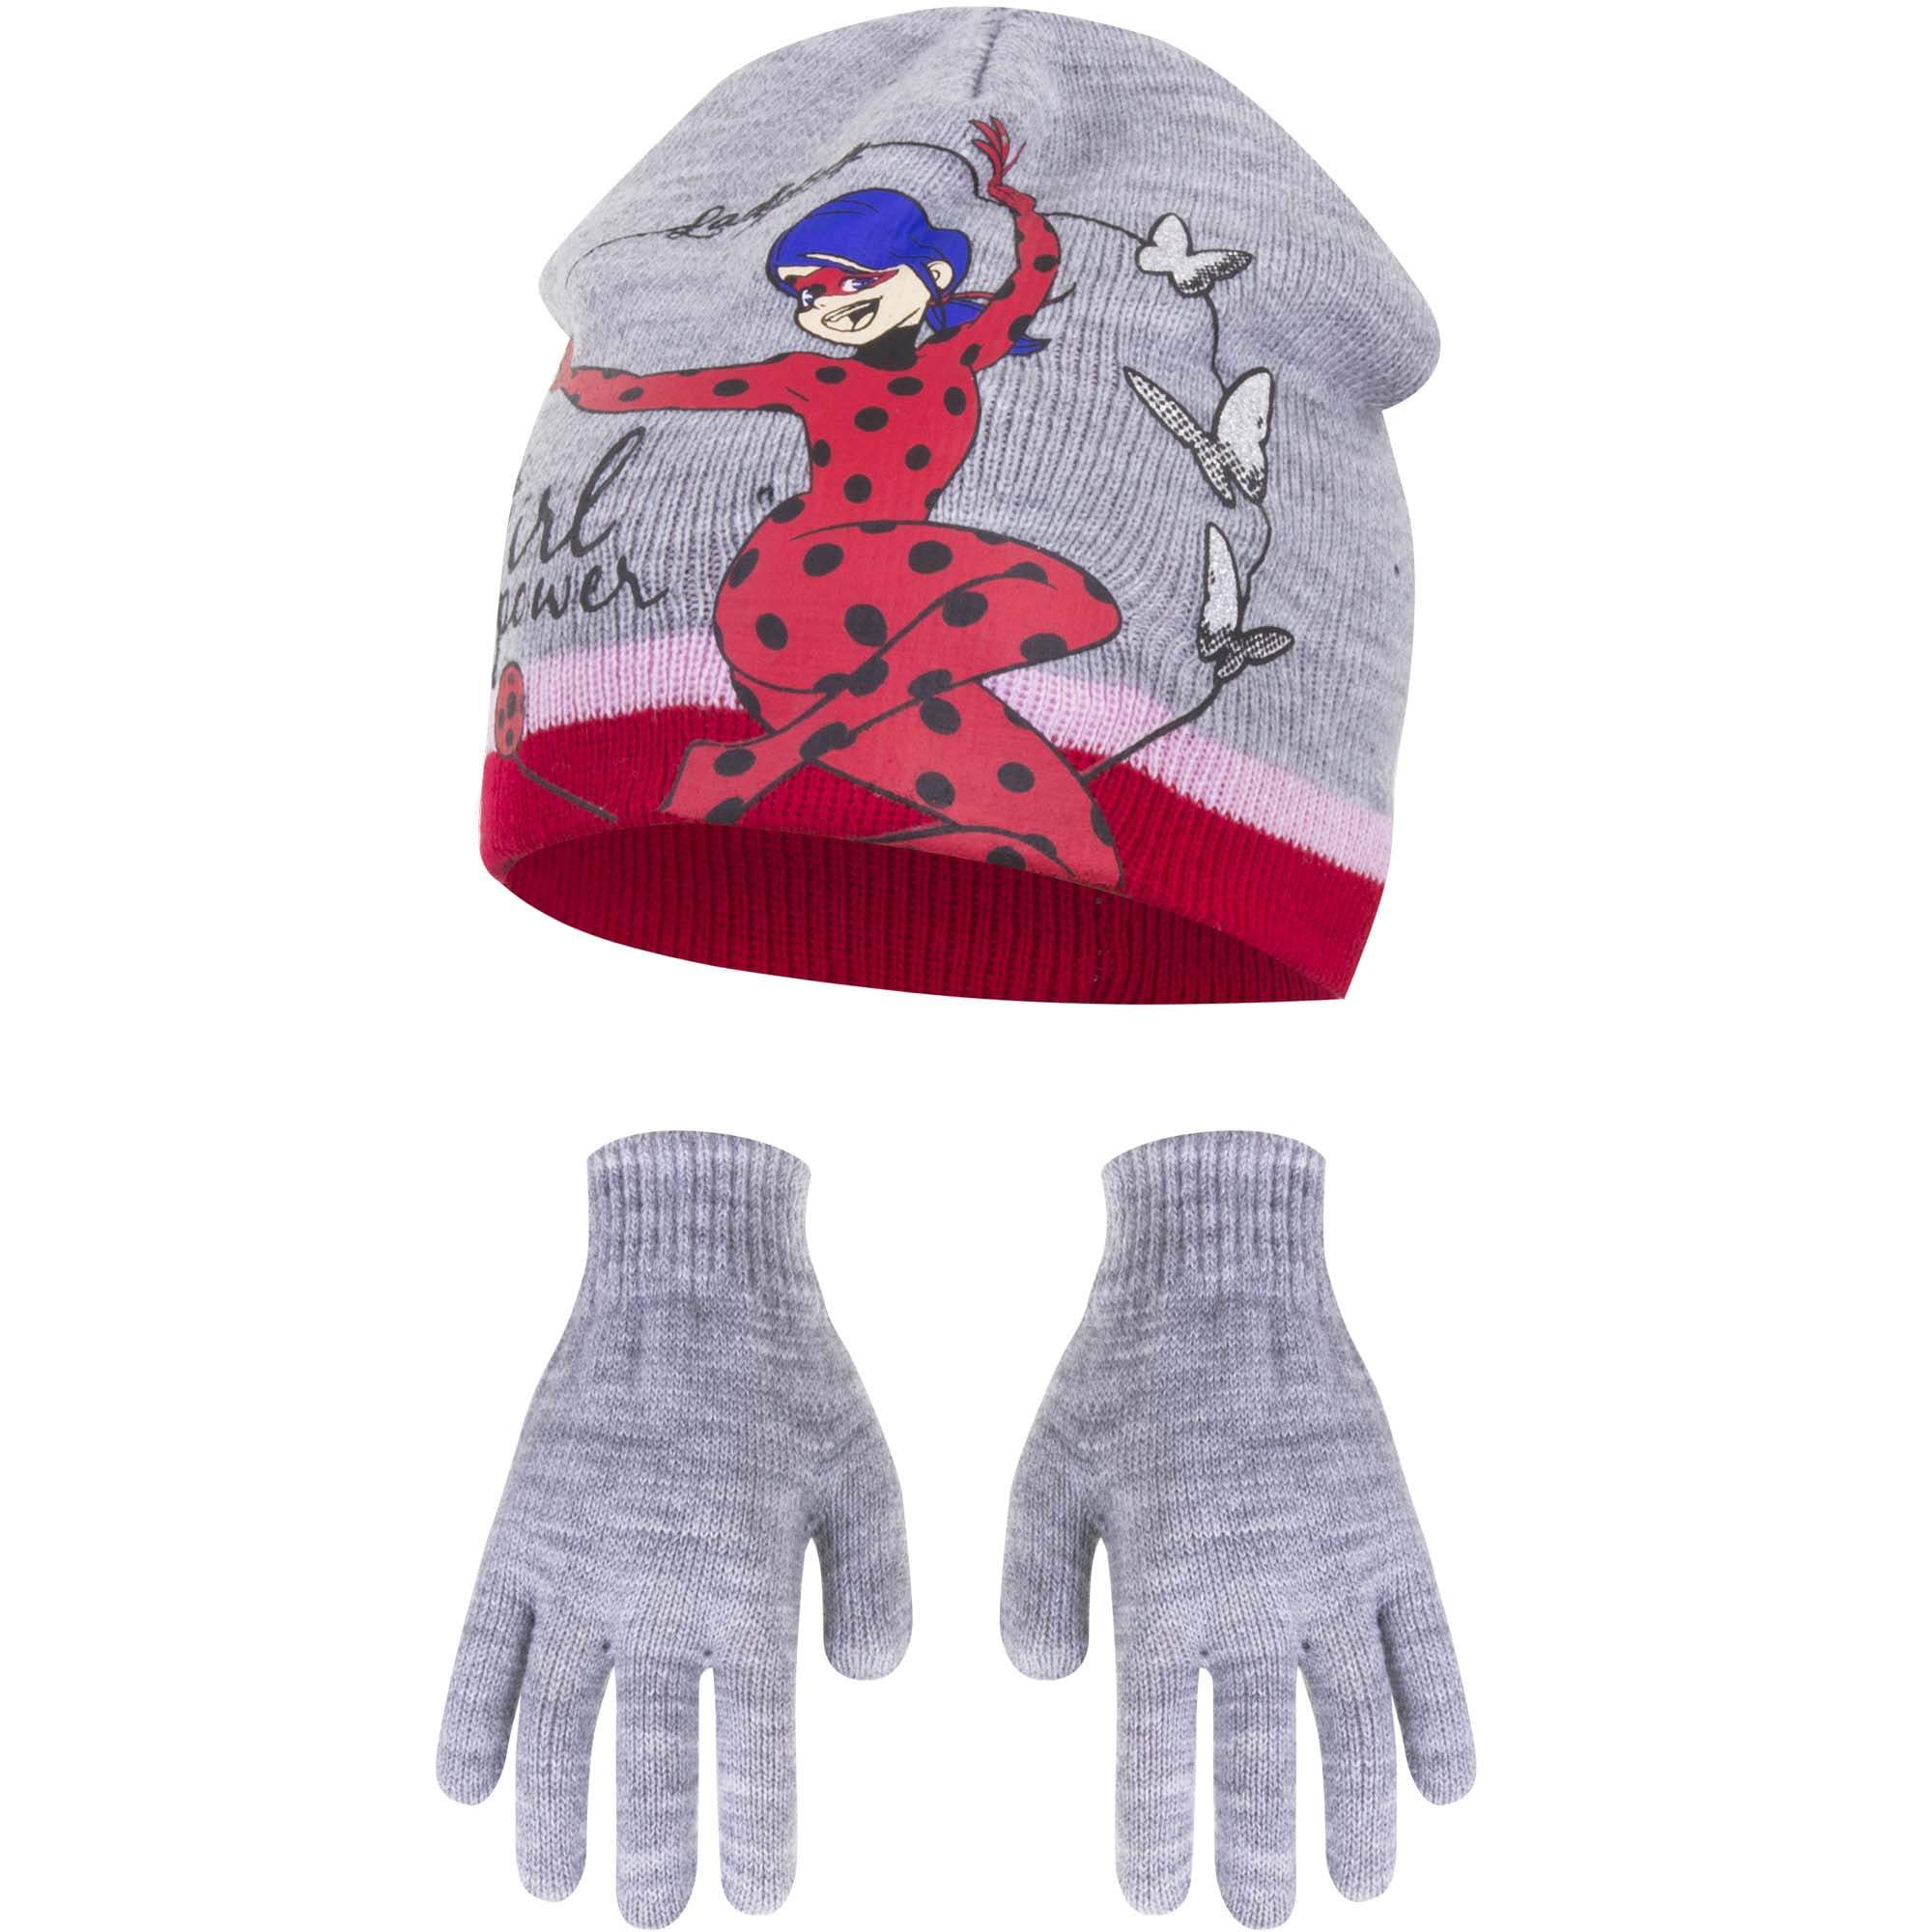 Girls Miraculous Ladybug Winter Hat and Gloves Set Beanie Bobble